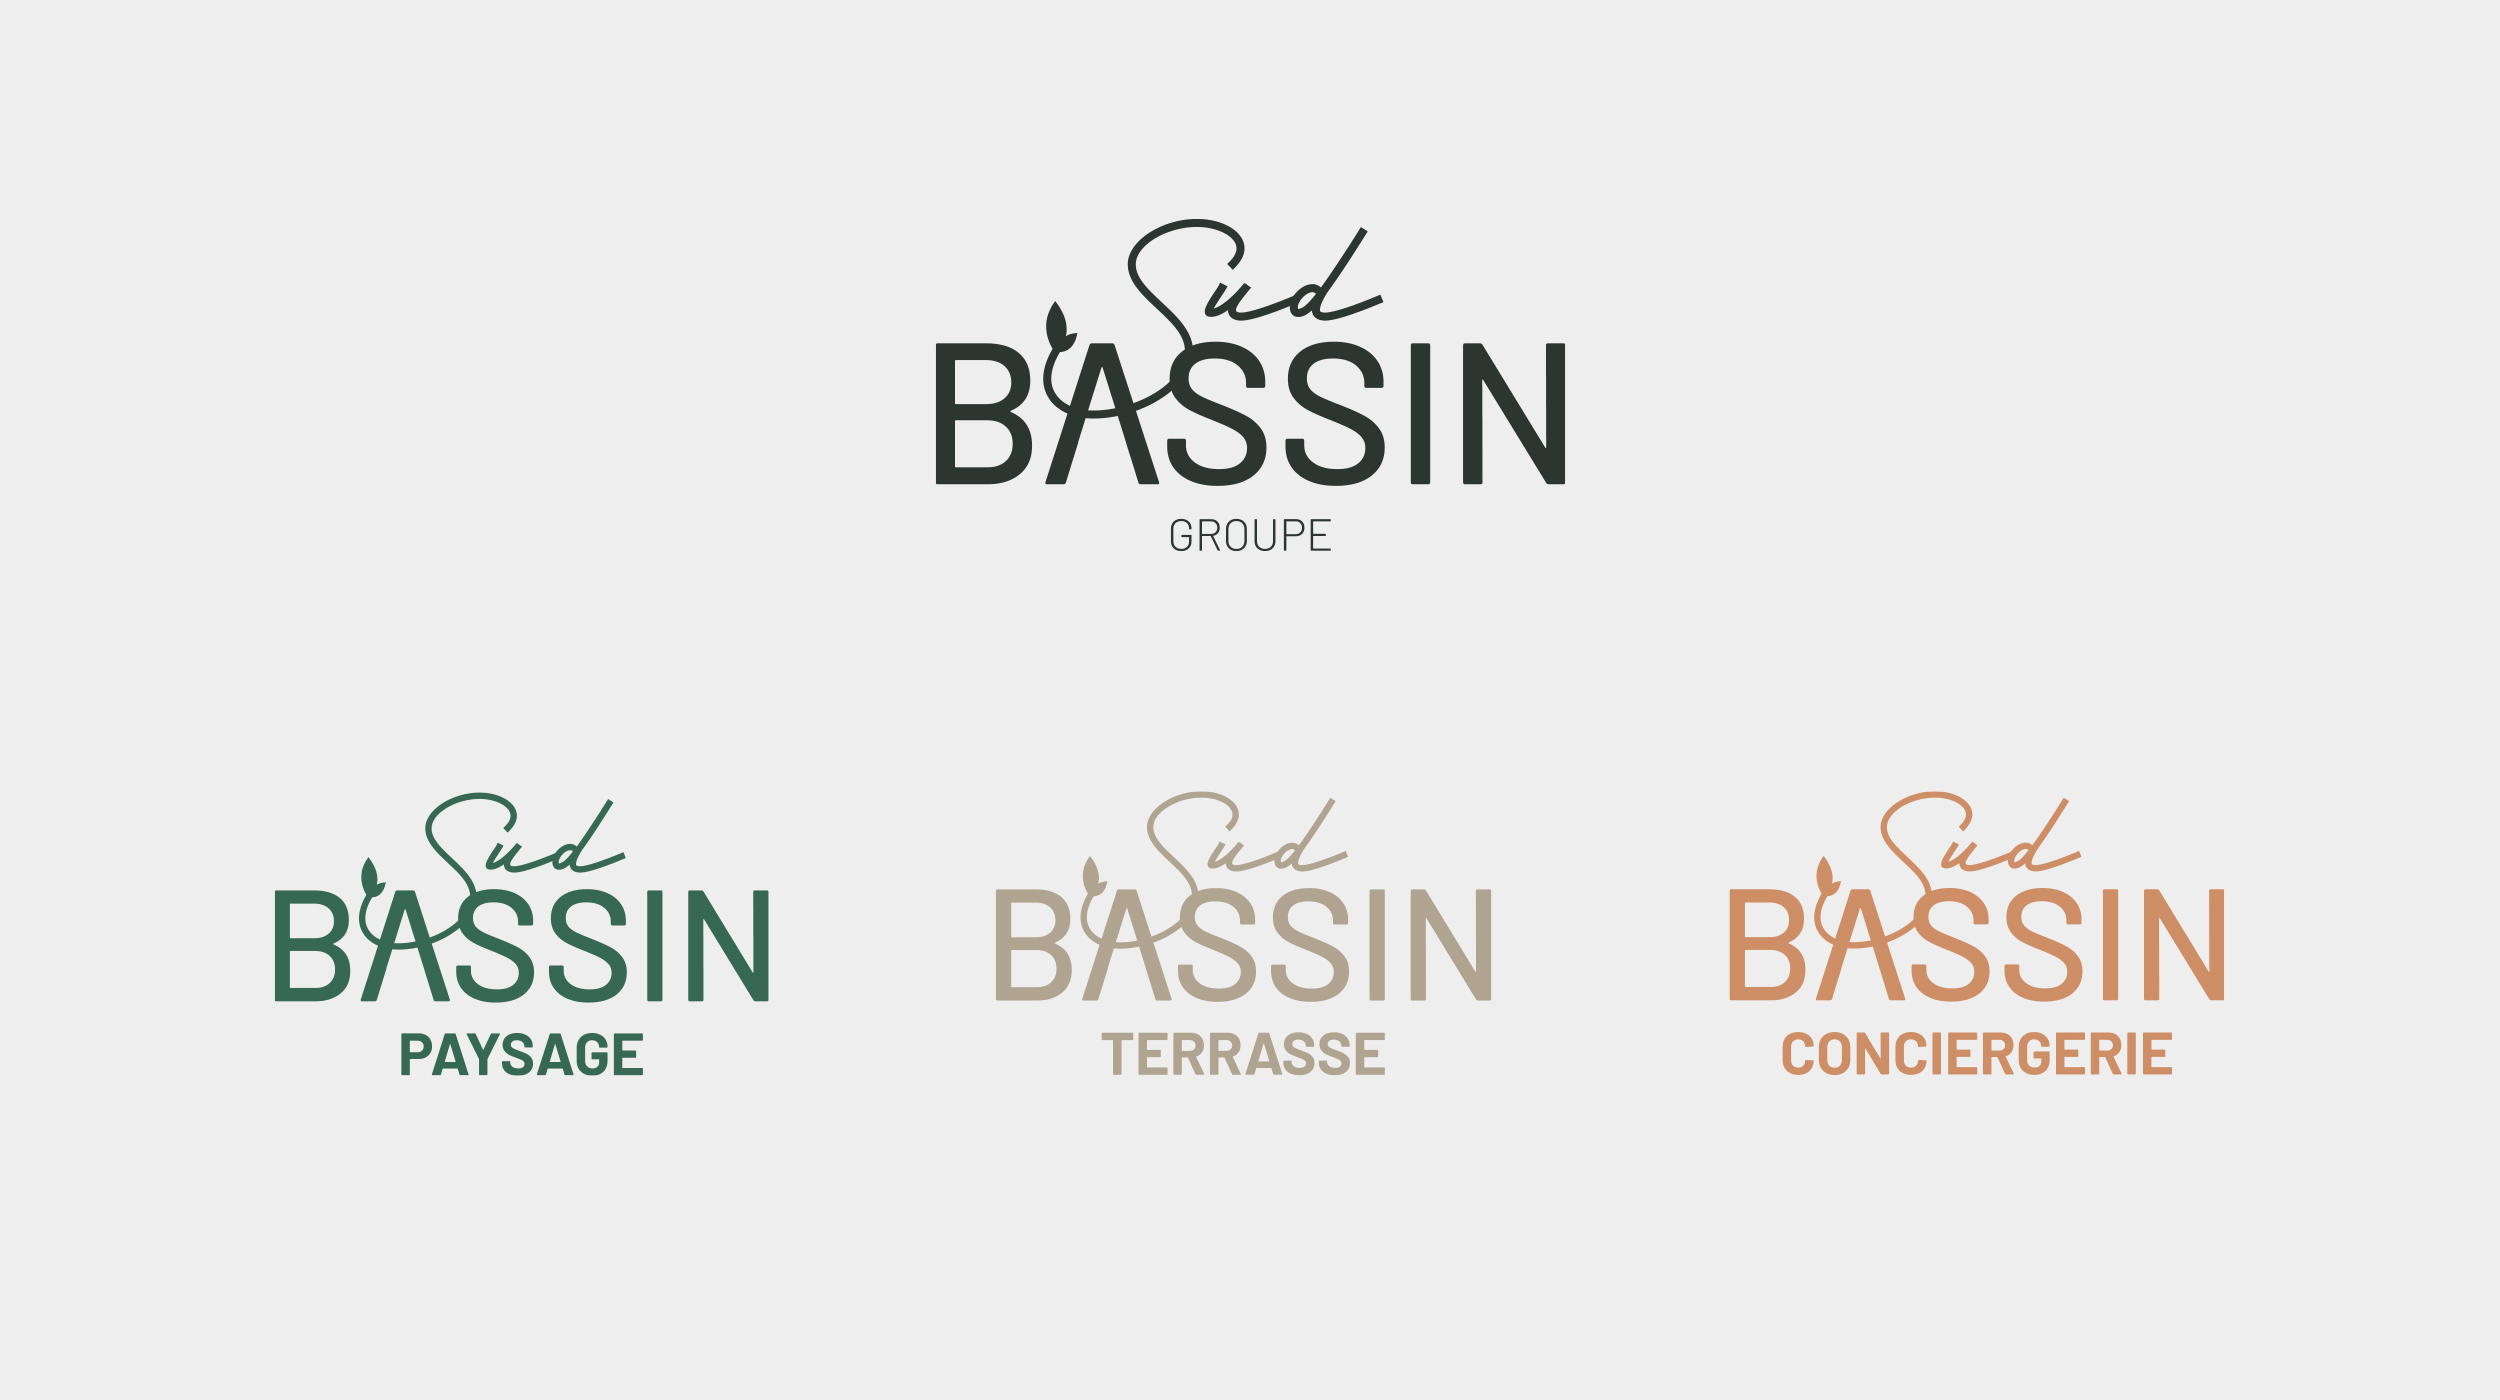 Groupe Sud Bassin - Logos